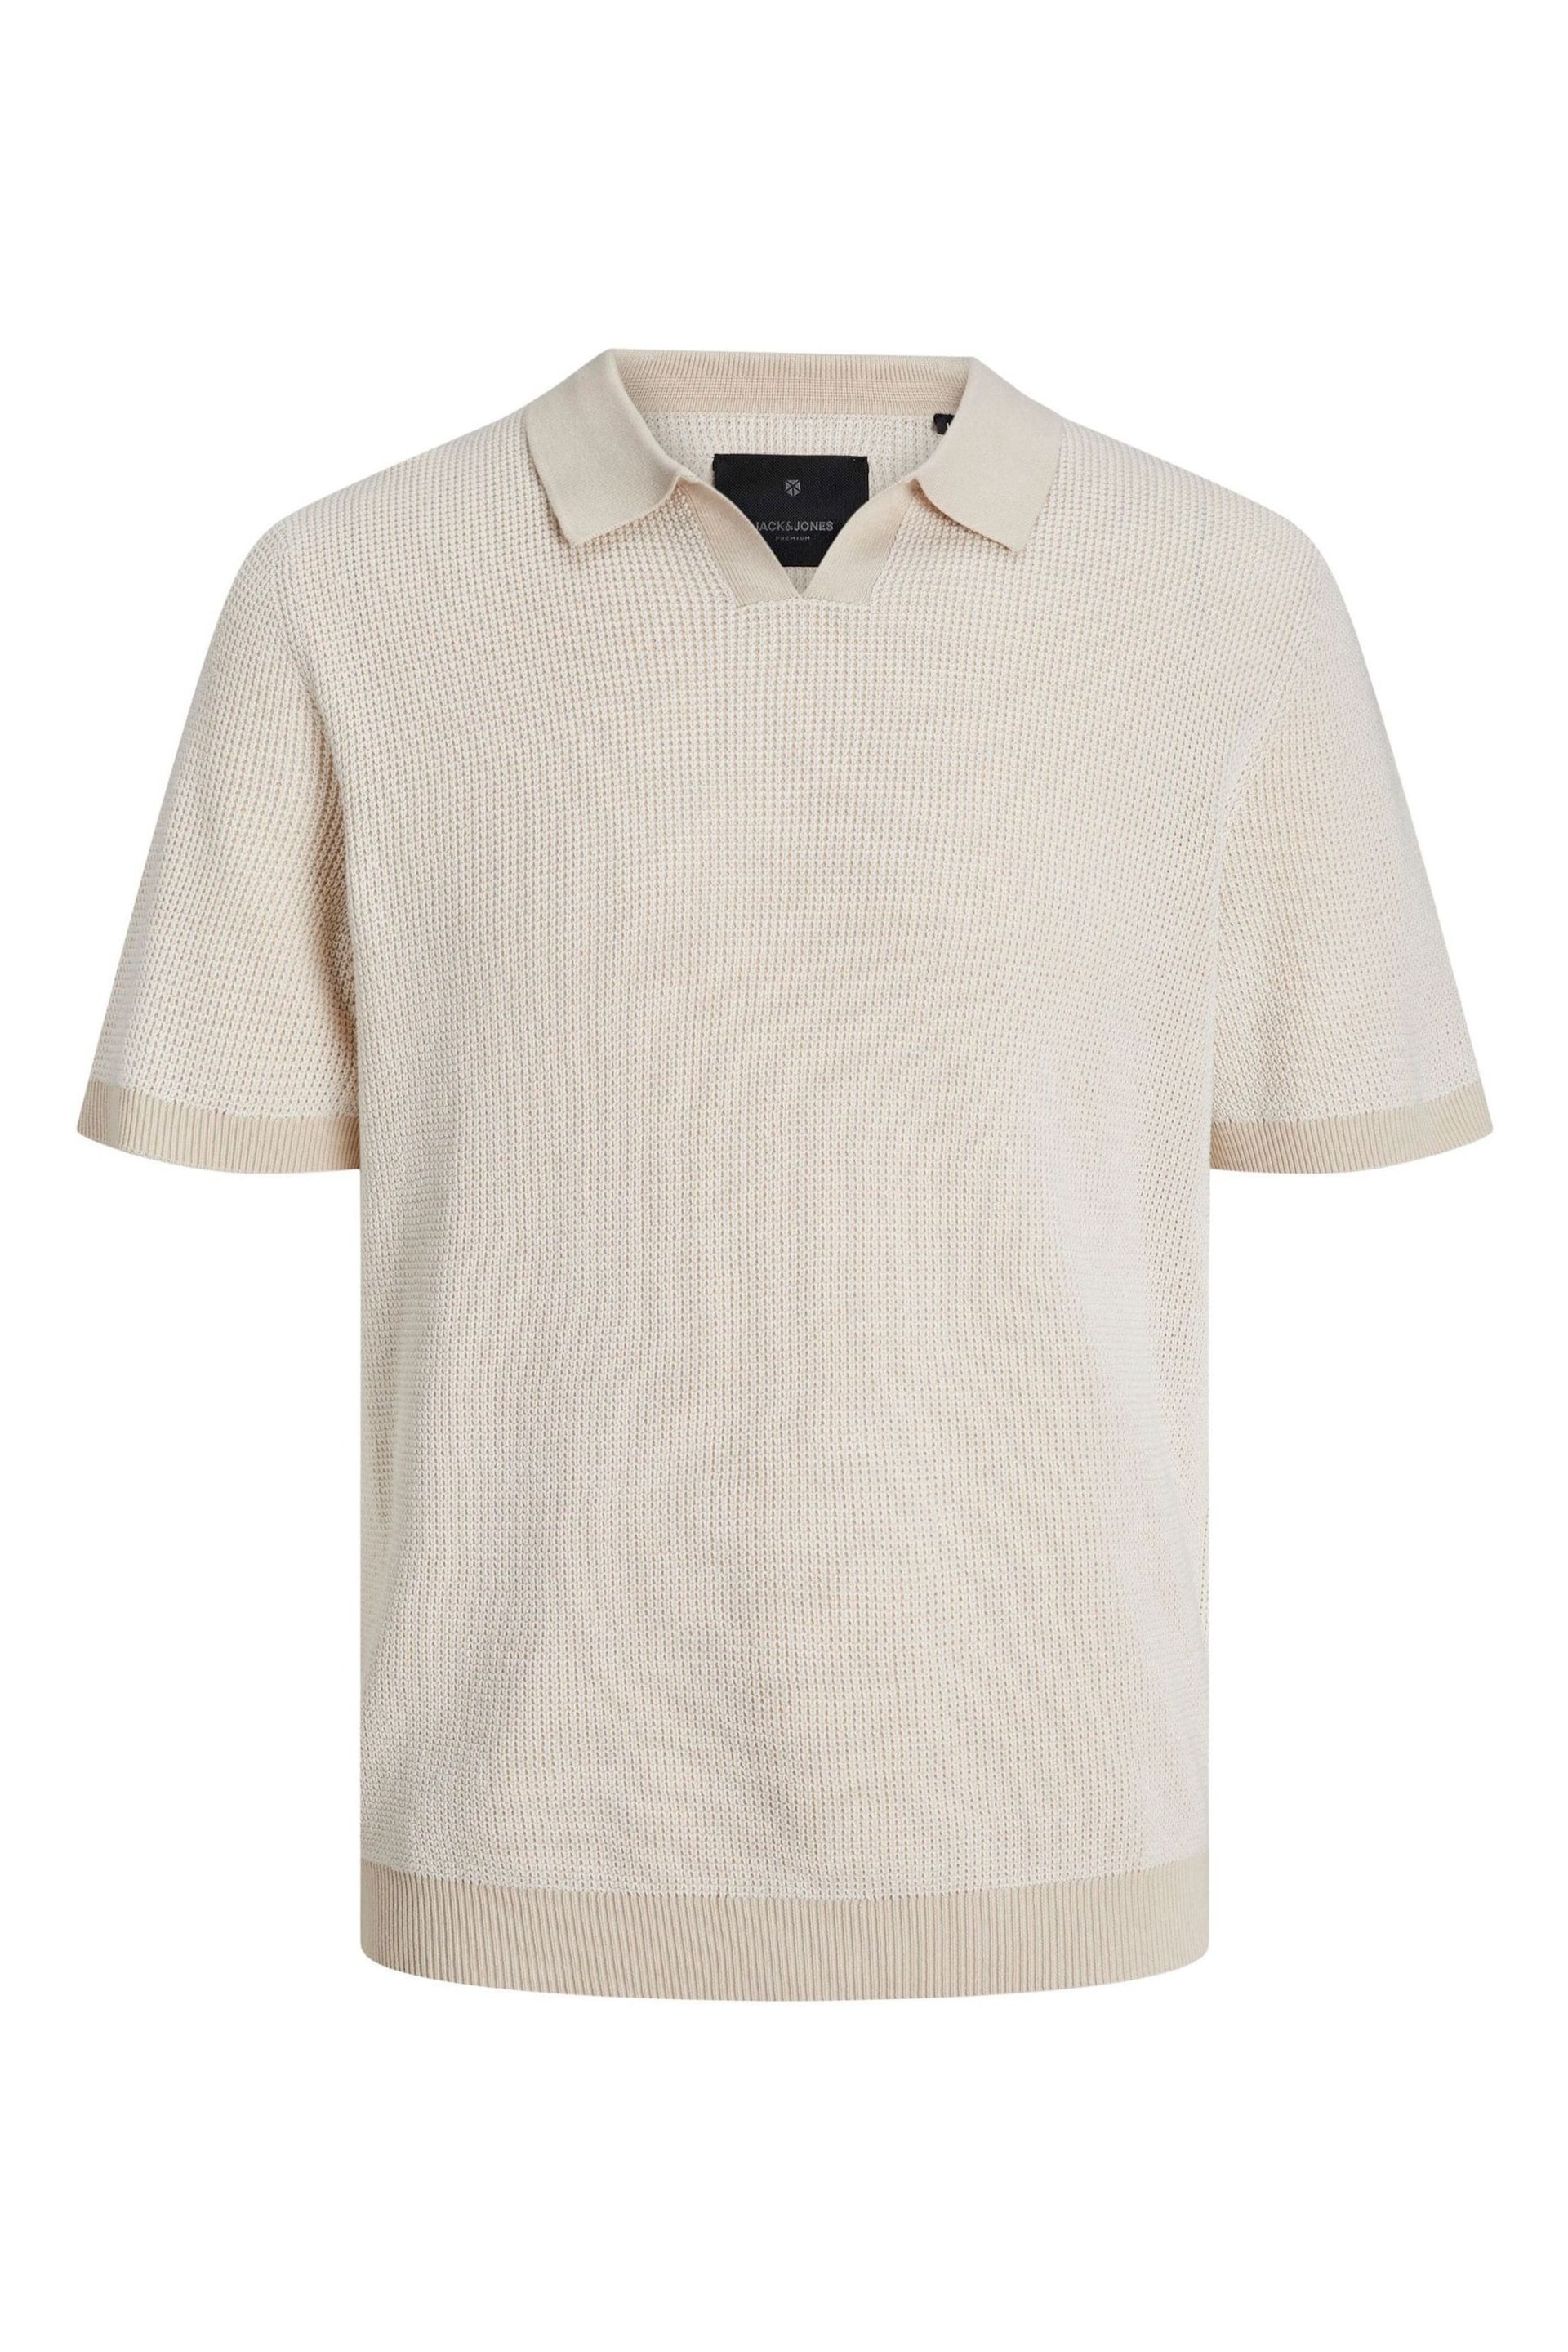 JACK & JONES Cream Trophy Collar Knitted Short Sleeve Polo Shirt - Image 6 of 6